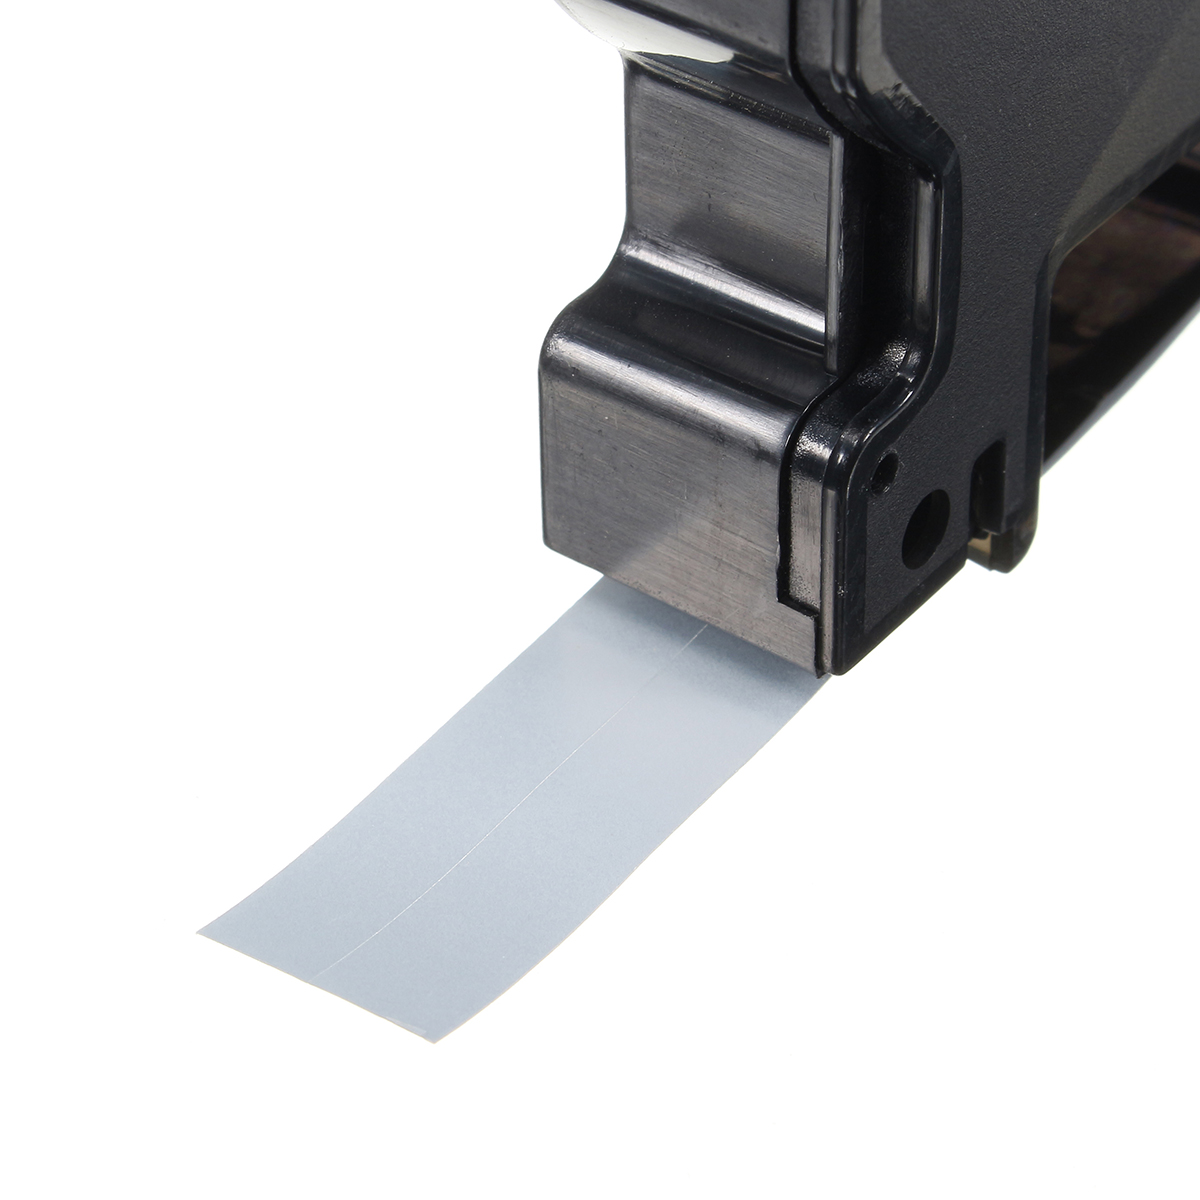 12mmx7m-Plastic-Label-Tape-Compatible-For-Dymo-D1-LetraTag-45016-45017-45018-45019-1559360-10